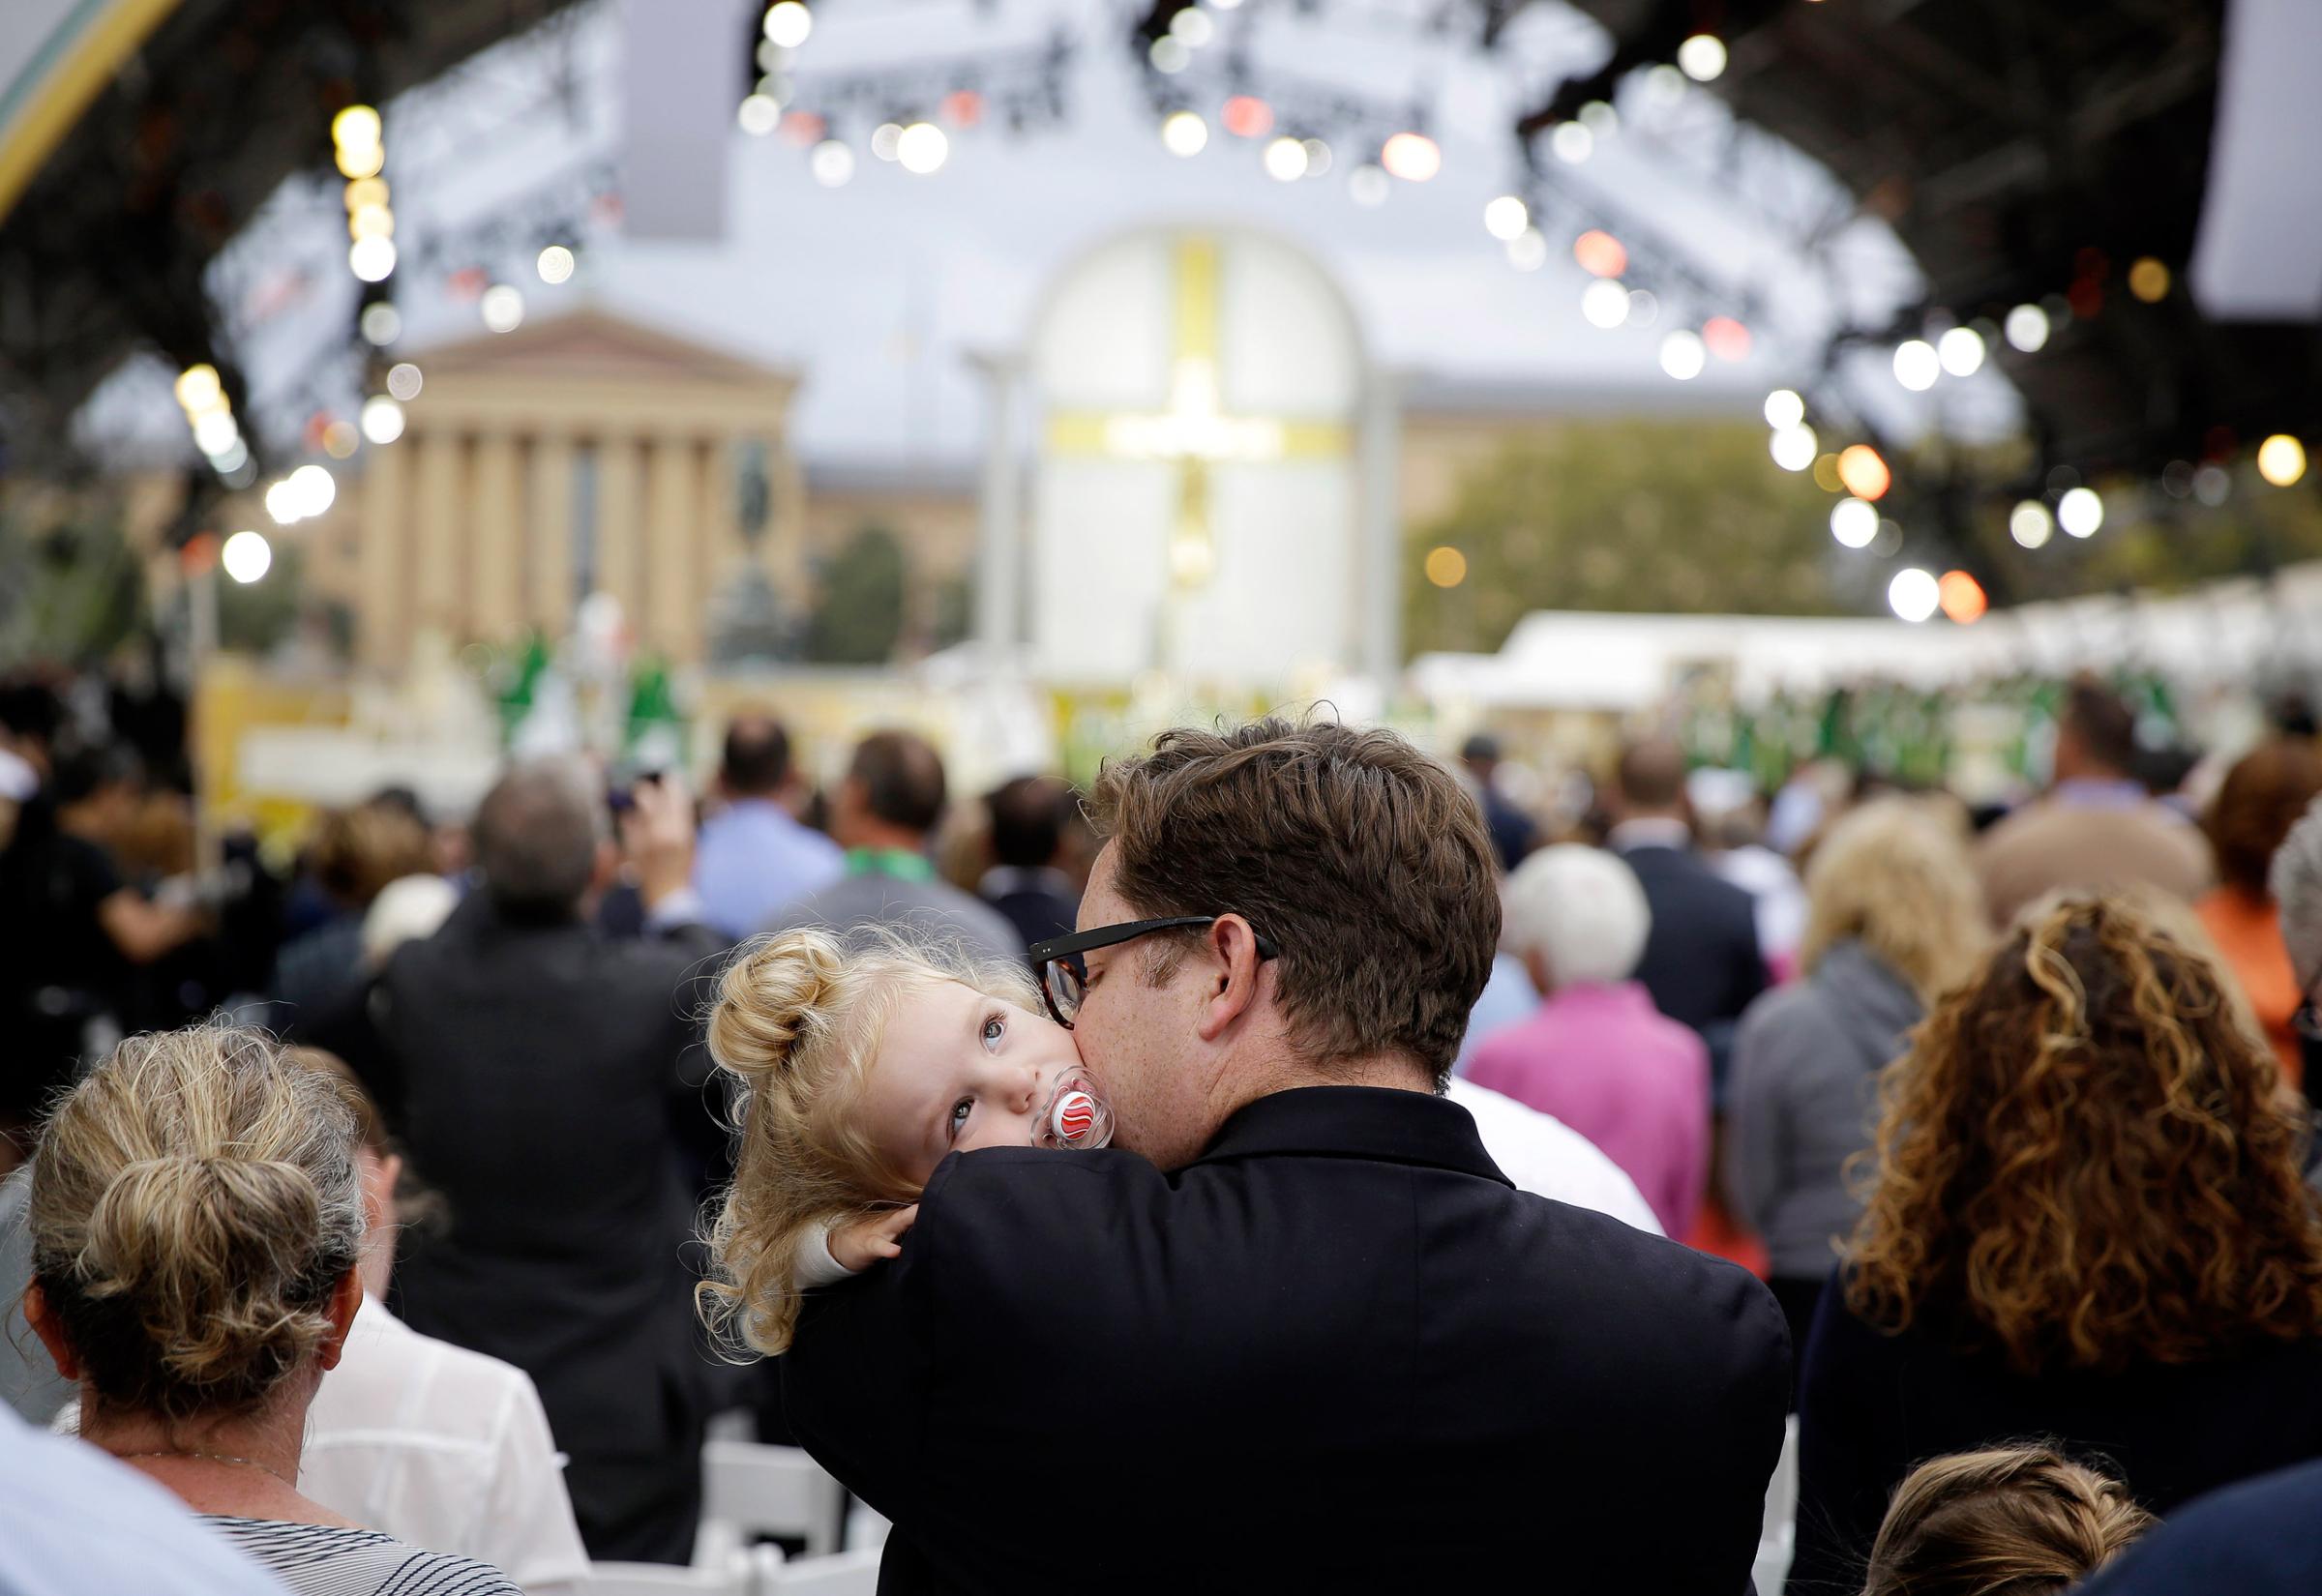 A man holds a child as Pope Francis celebrates Mass, Sunday, Sept. 27, 2015, in Philadelphia. (AP Photo/Matt Slocum)